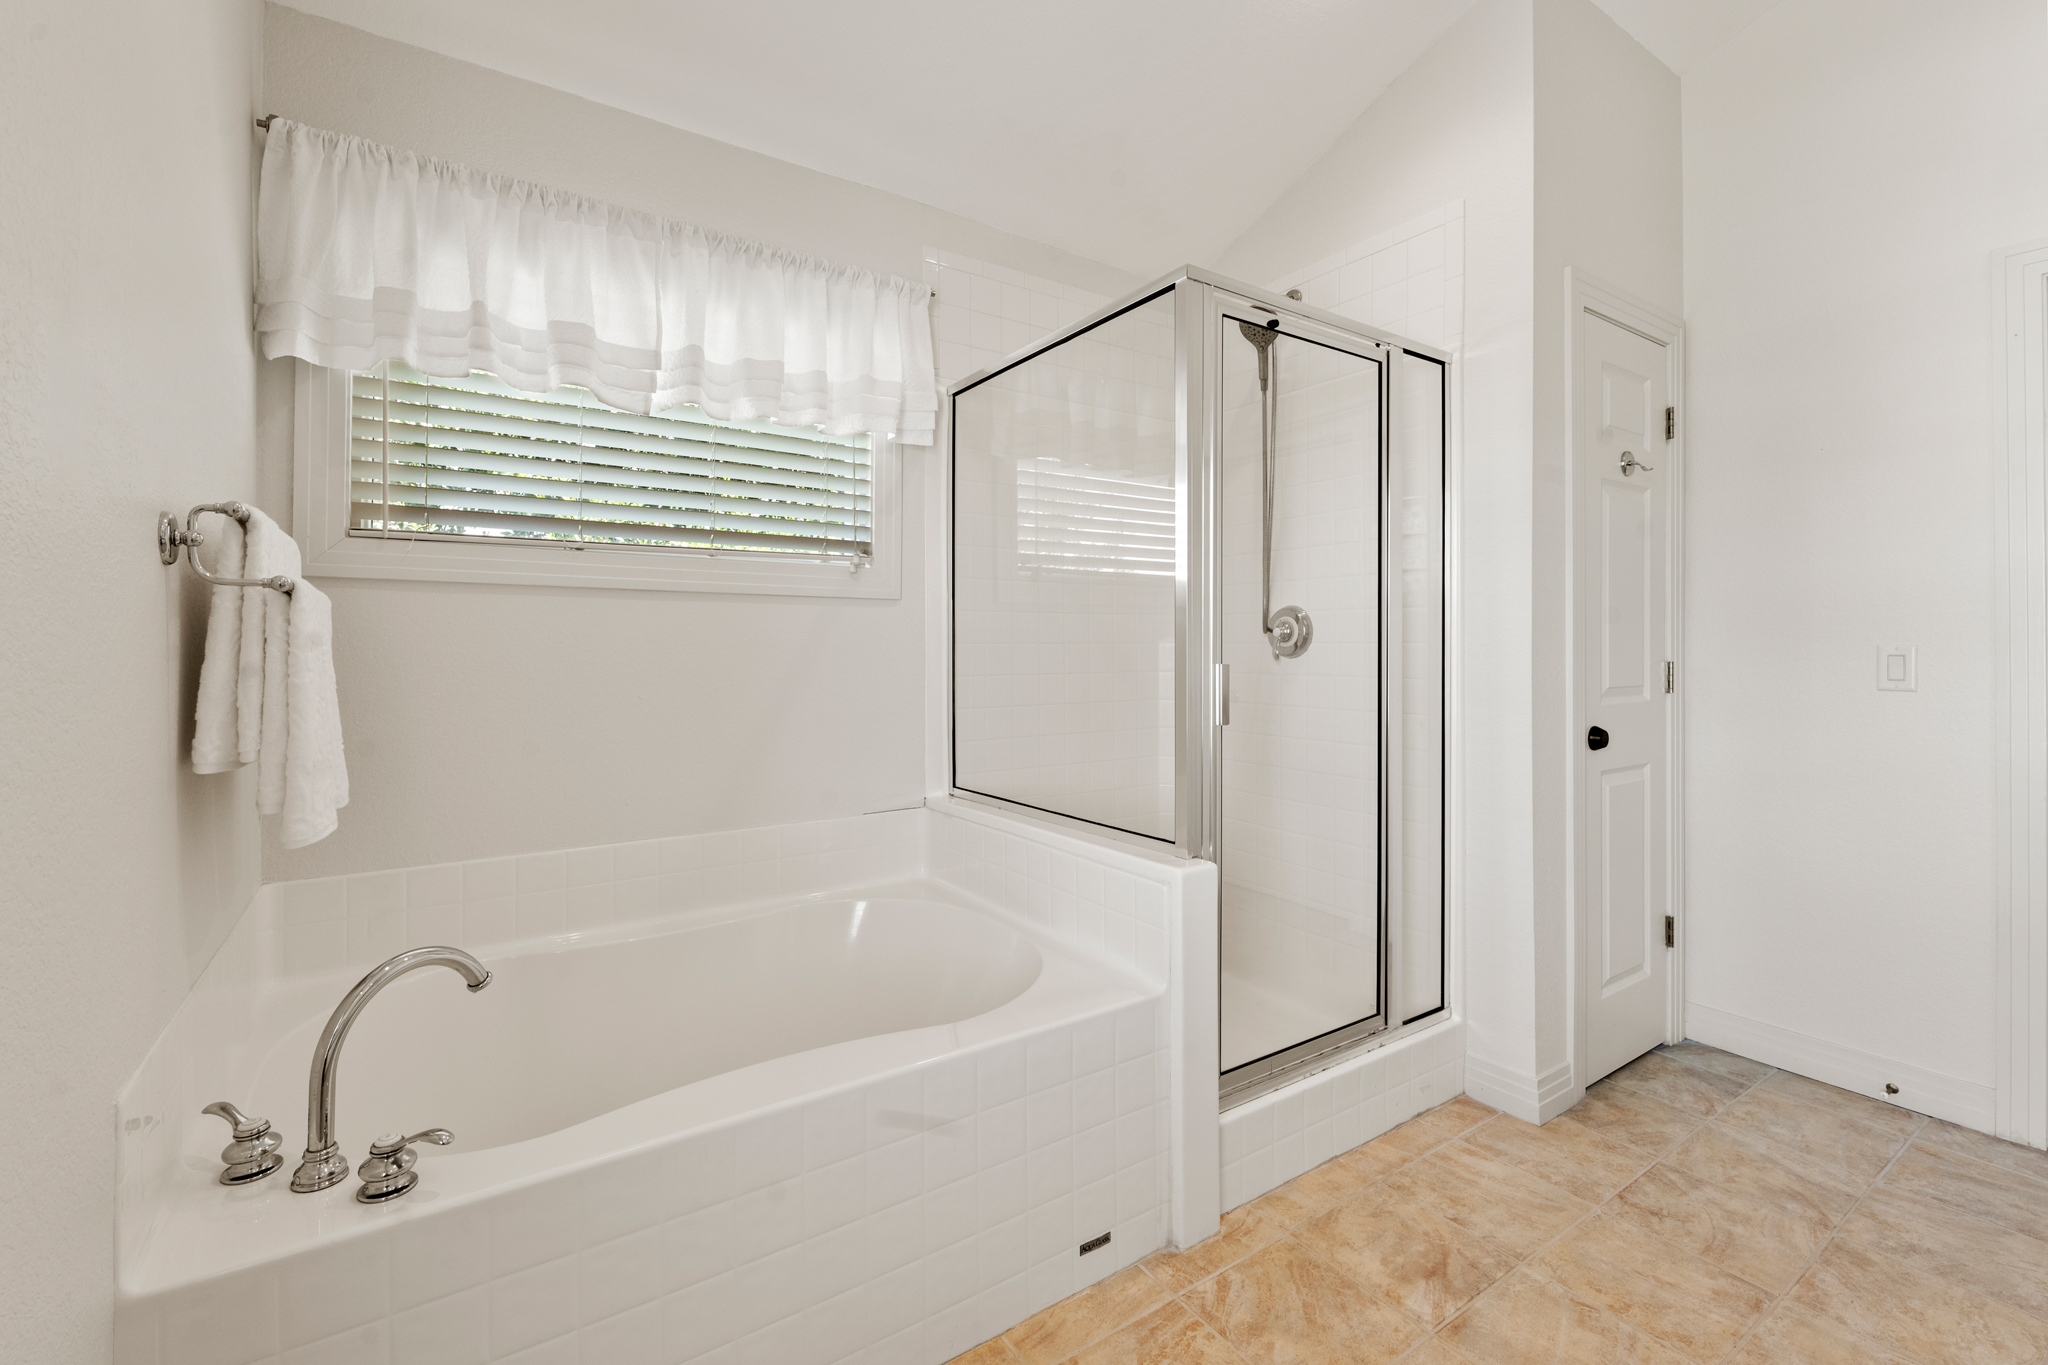 HK37: Hollis Haven | Top Level Bedroom 4 Private Bath